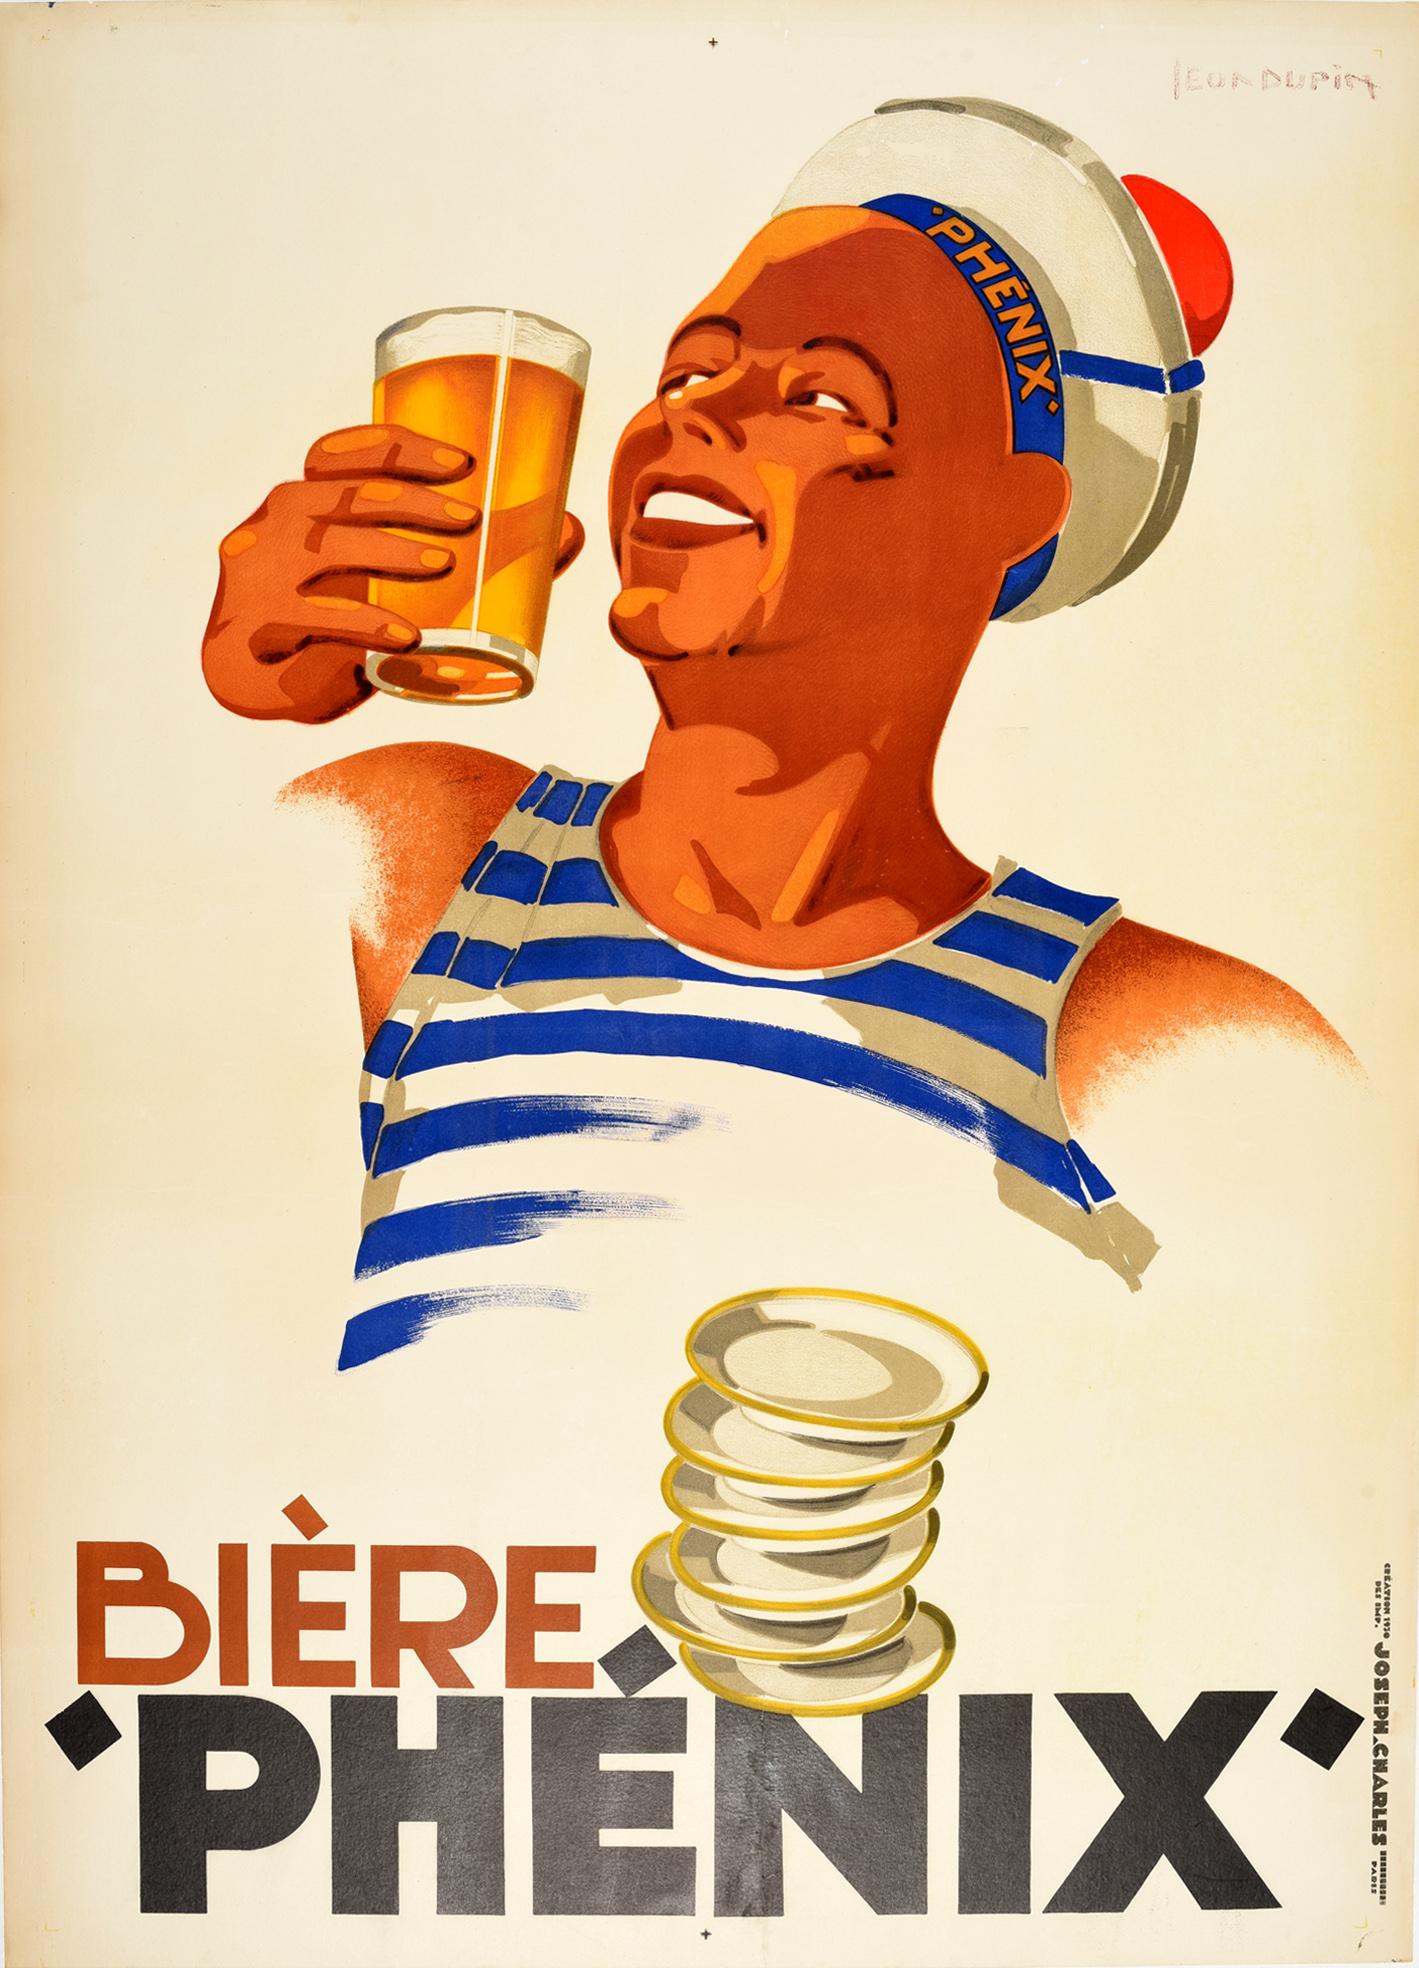 Leon Dupin Print - Original Vintage Poster Biere Phenix Beer Sailor Design Drink Advertising Art